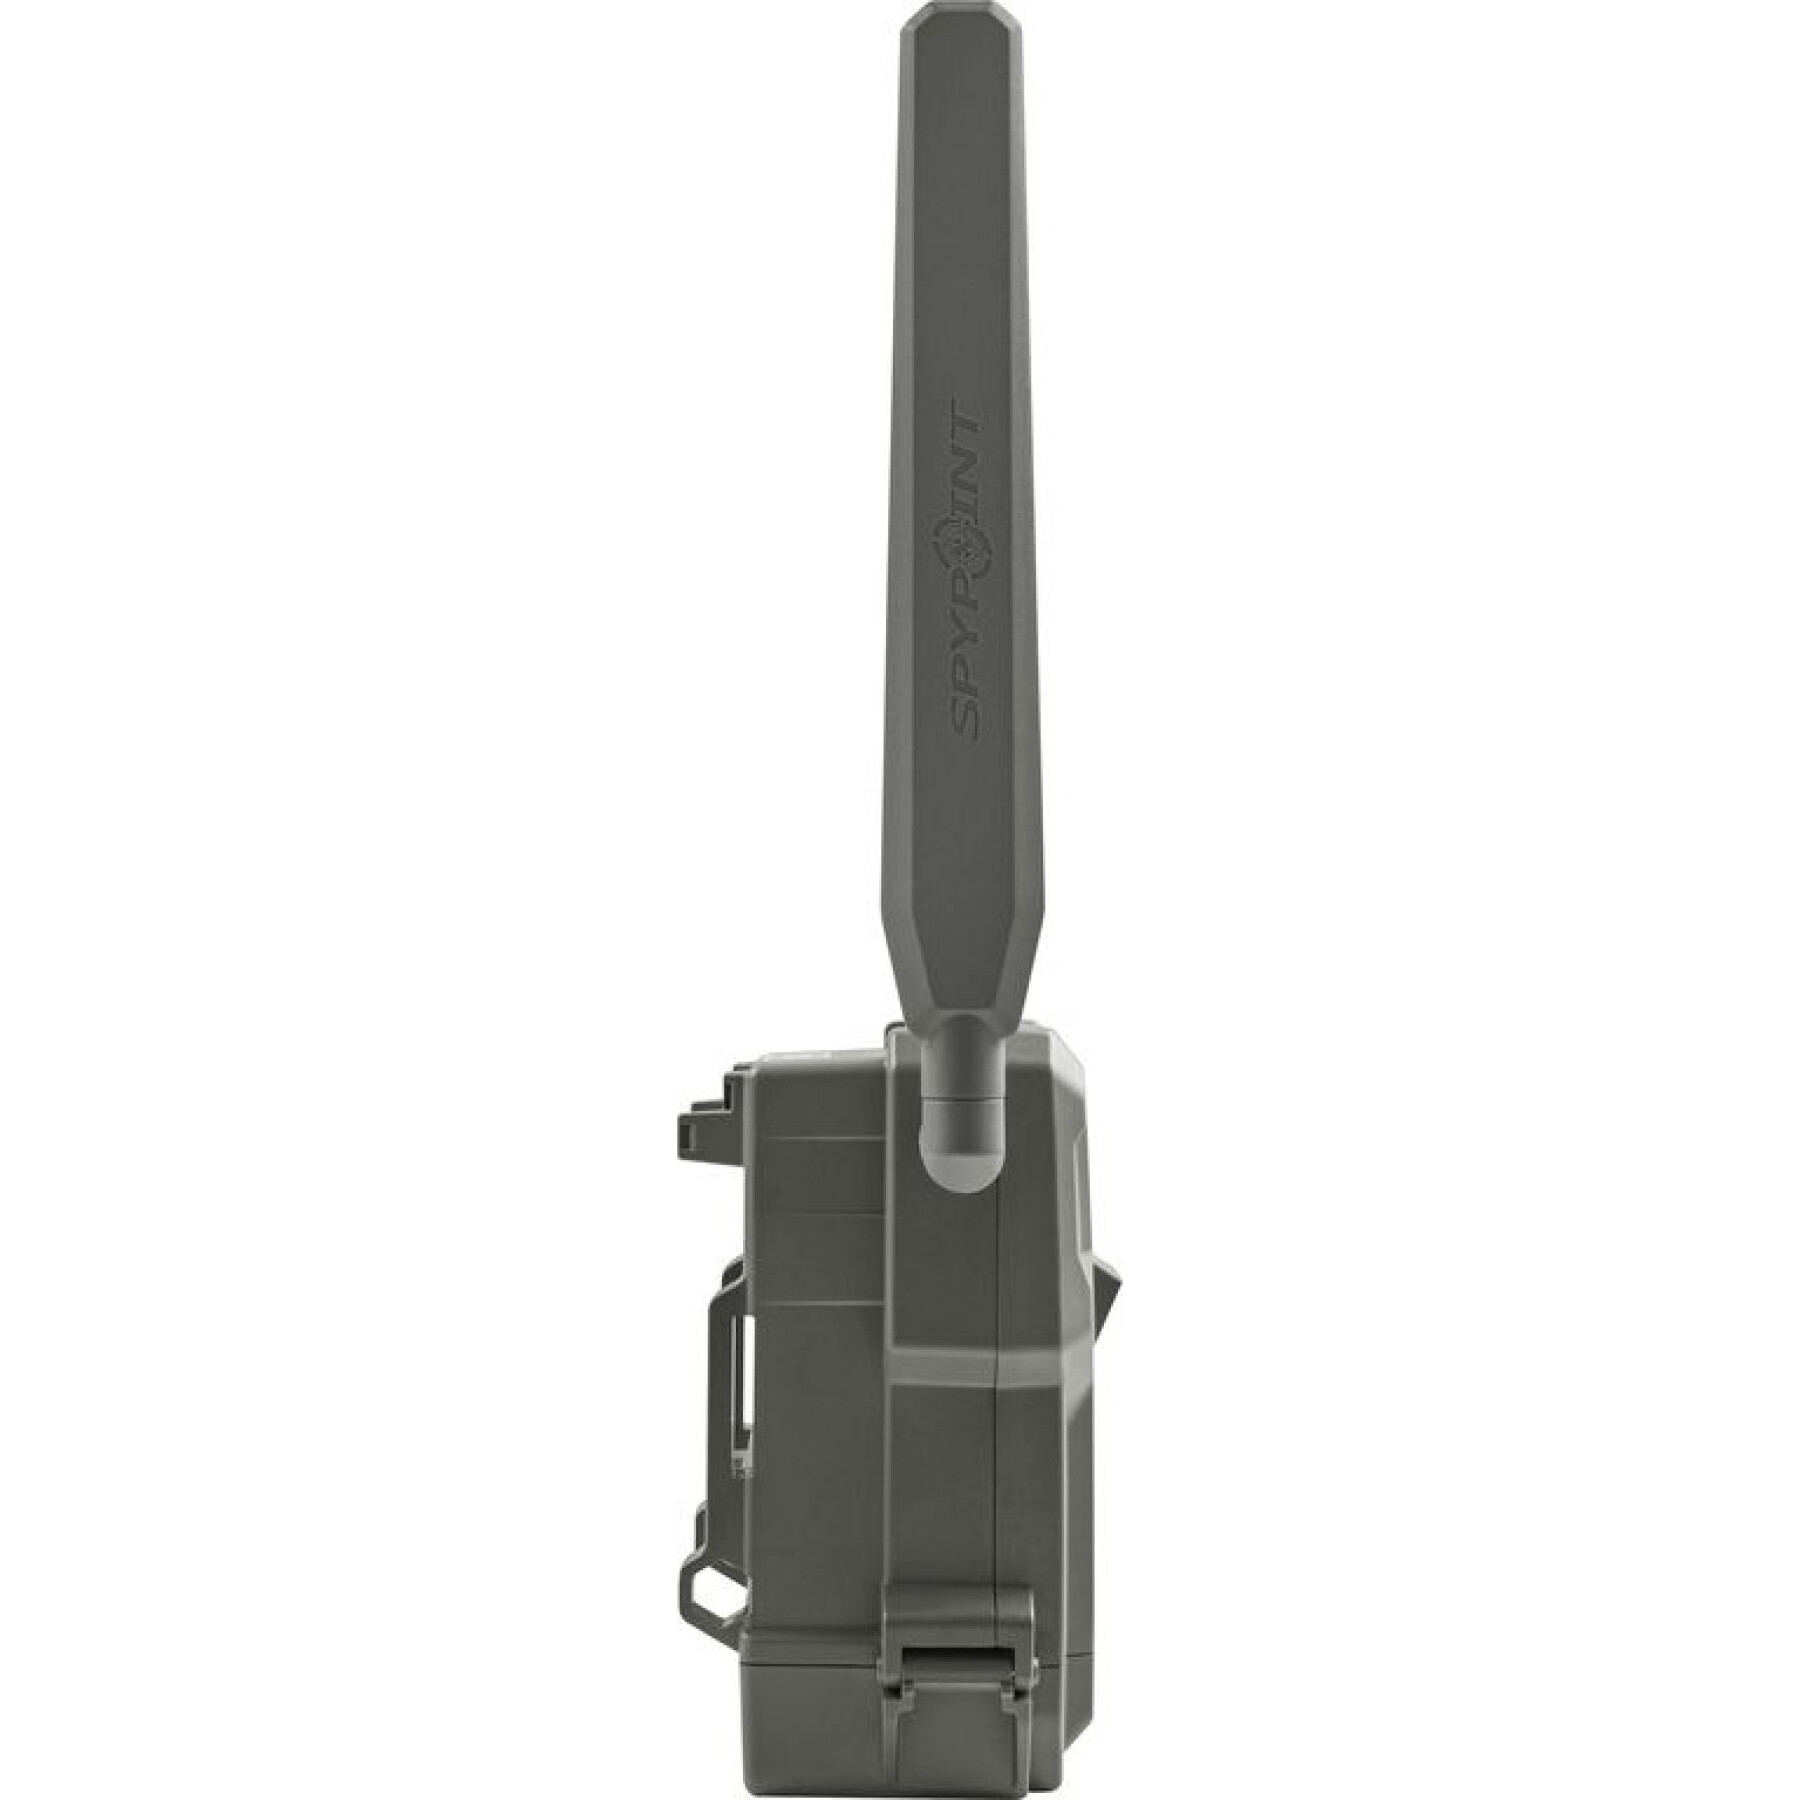 Jagdkamera mit Videoübertragung Spypoint Flex-E36